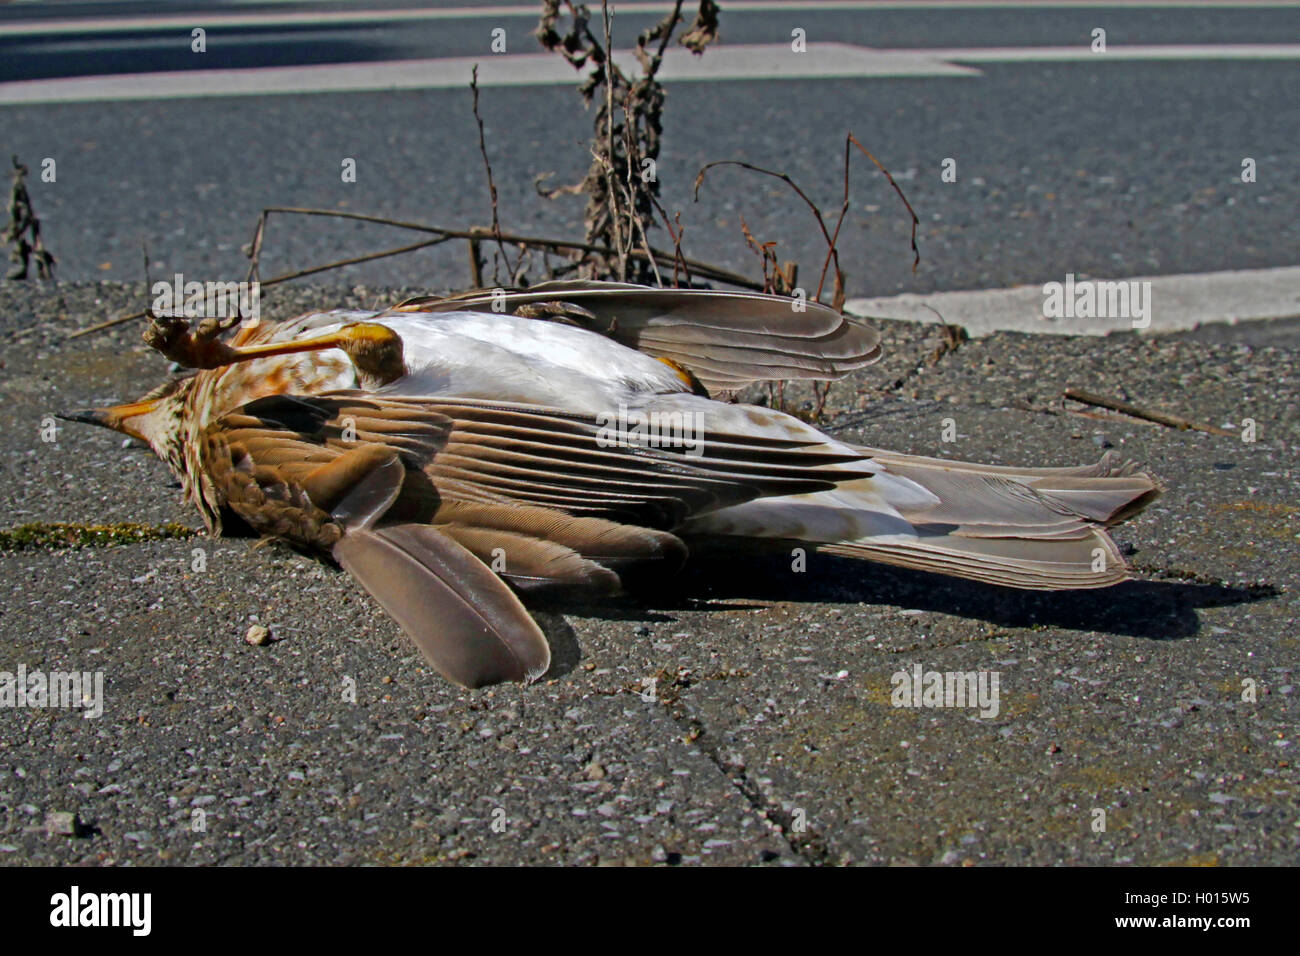 Singdrossel, Sing-Drossel (Turdus philomelos), von einem PKW getoetet, Singdrossel liegt tot auf einer asphaltierten Strasse, De Foto Stock